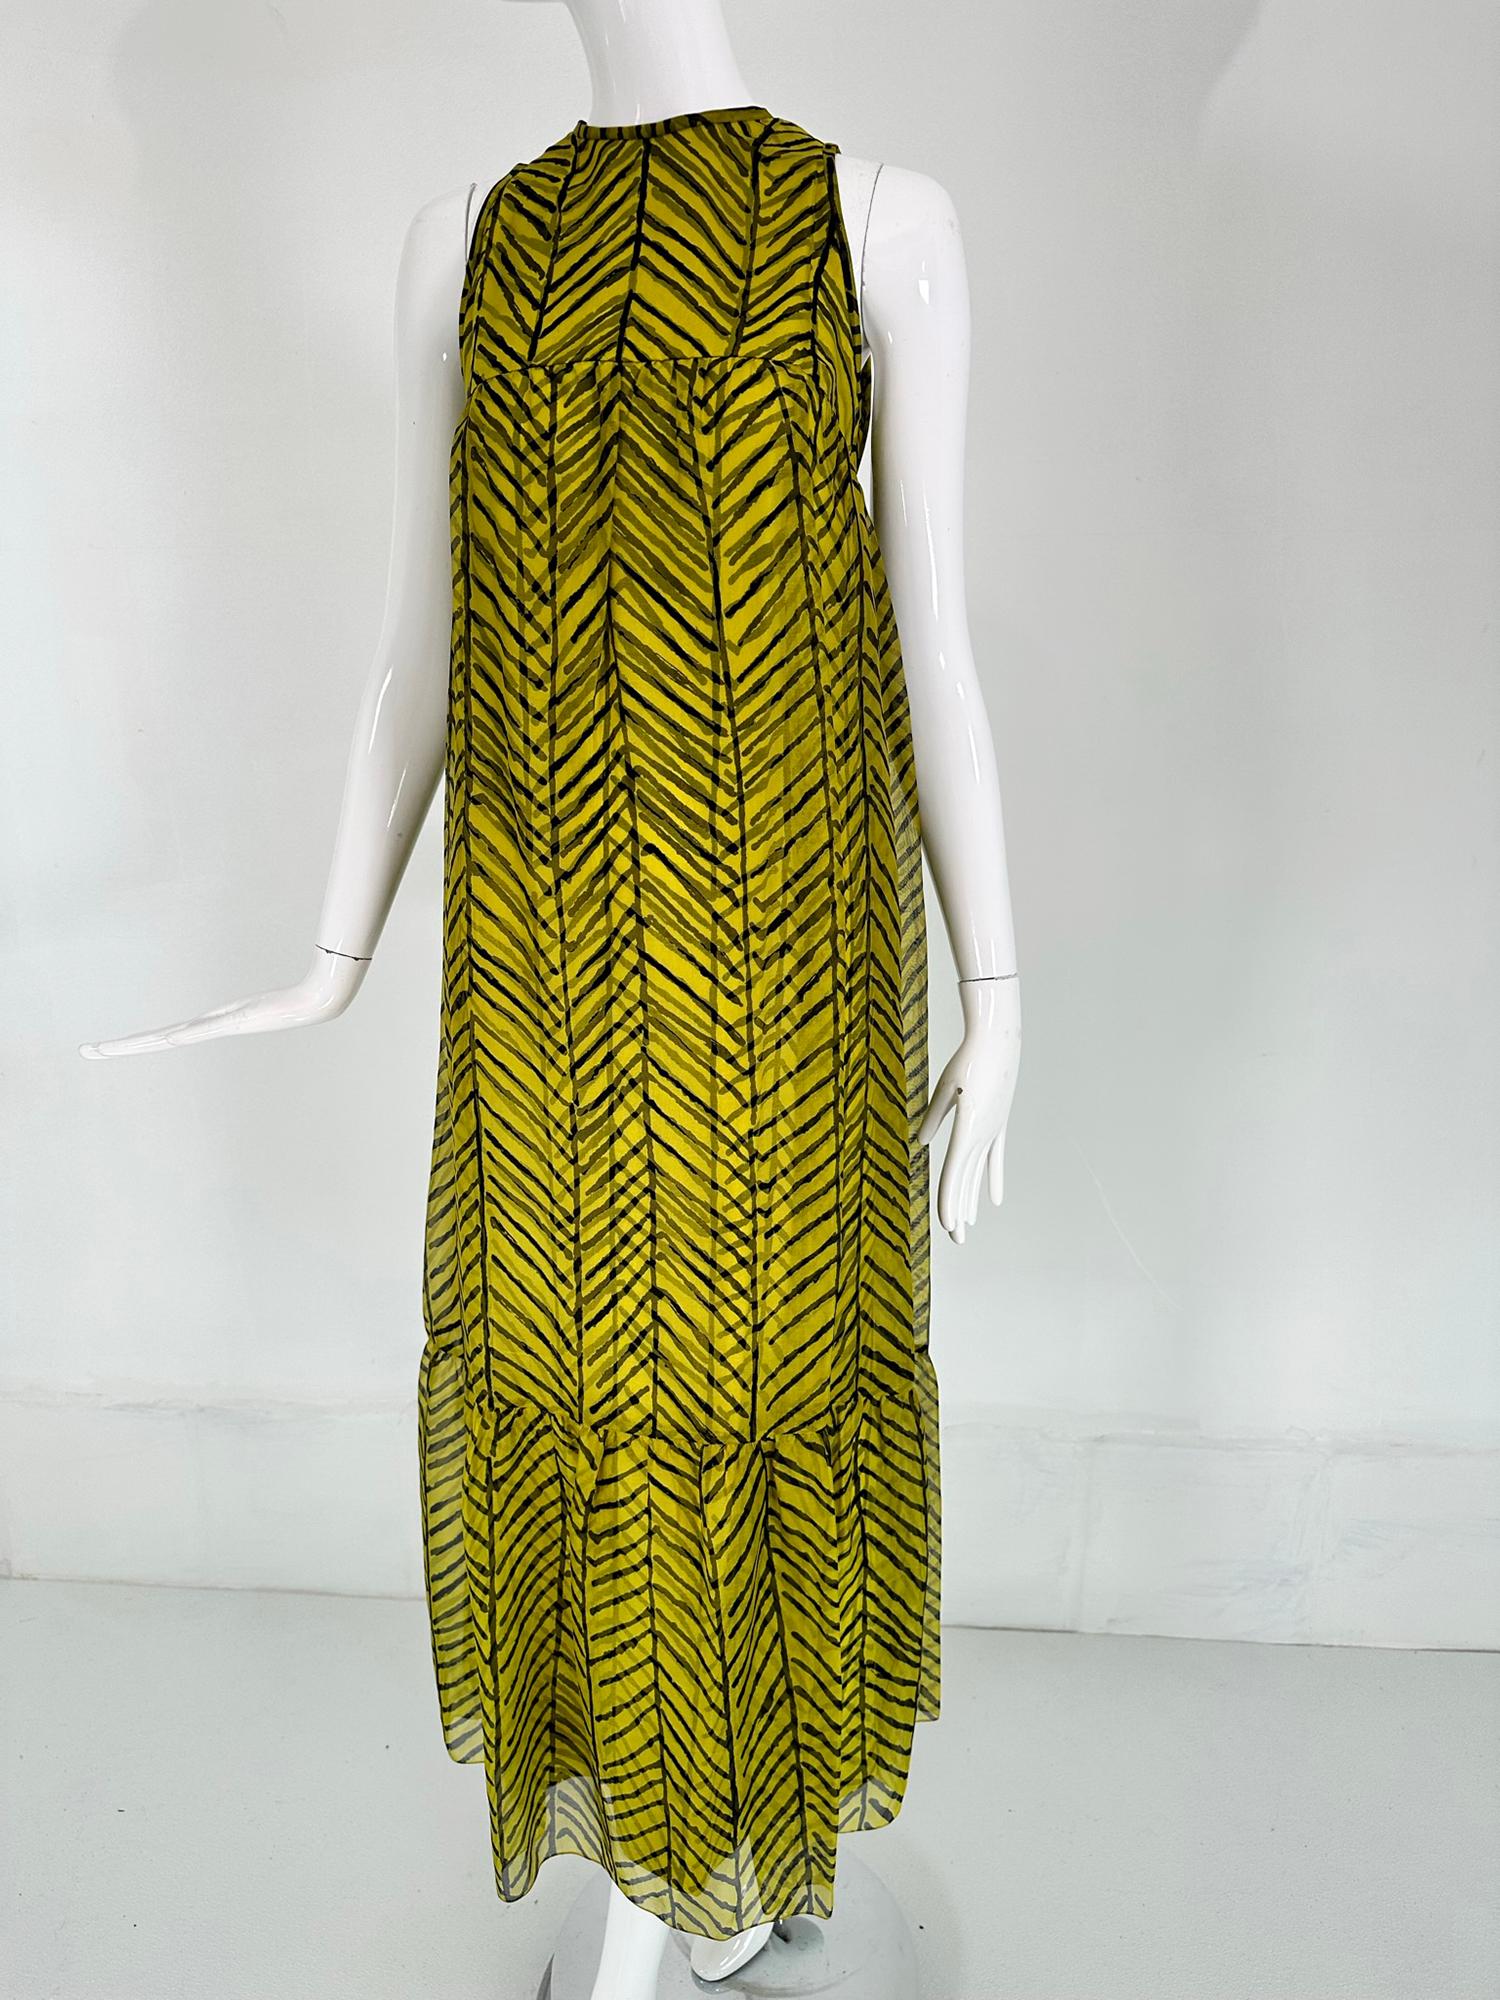 Tiffeau & Busch LTD. 1966 Chartreuse & Black Silk Organza & Twill Maxi Dress For Sale 6